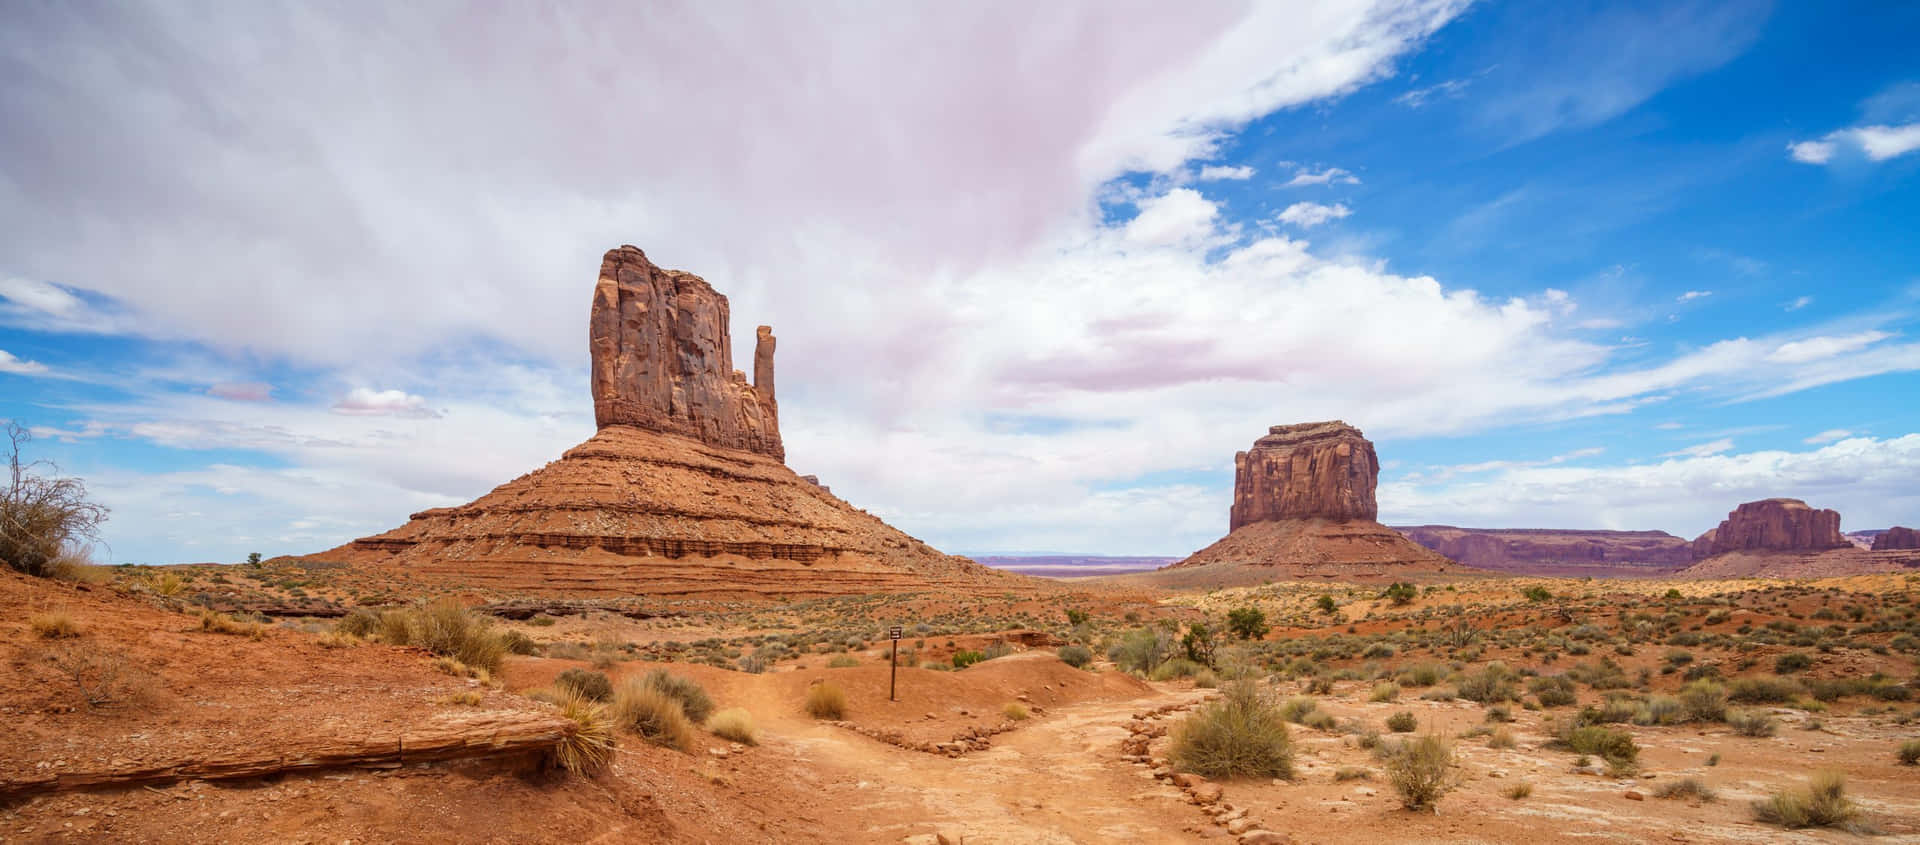 Monument Valley Navajo Tribal Park 2560 X 1126 Wallpaper